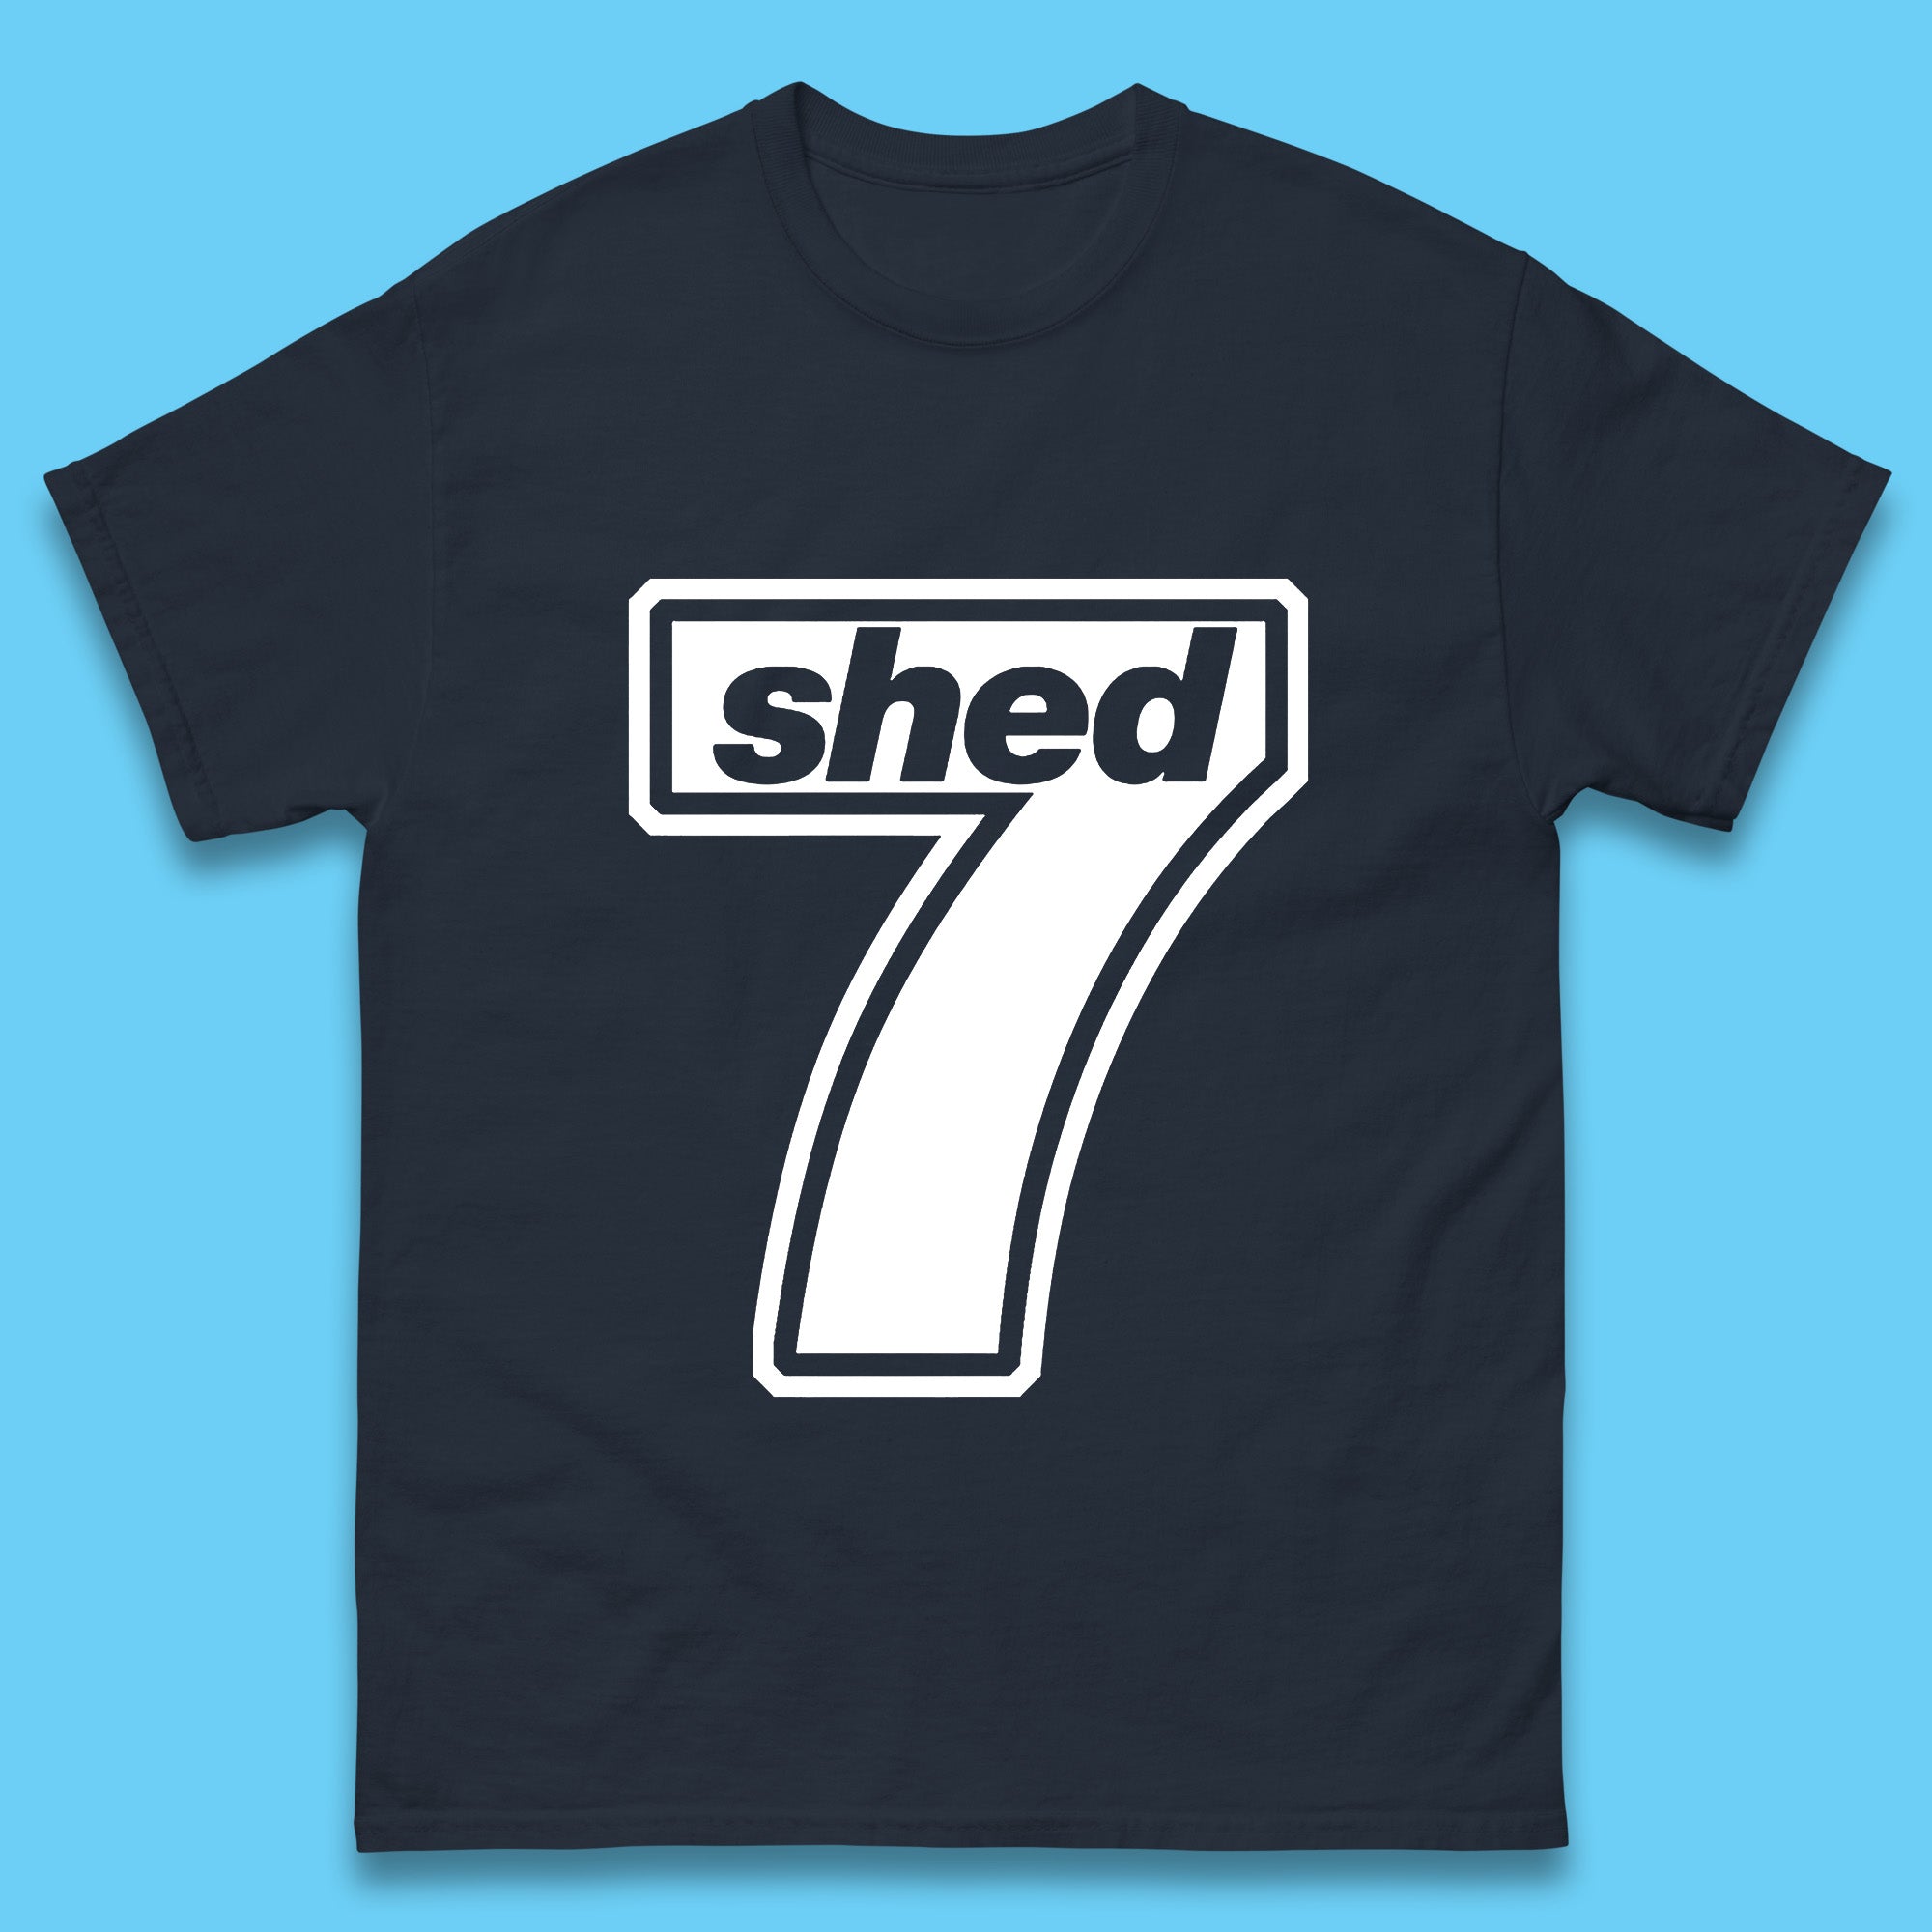 Shed Seven Band T Shirt